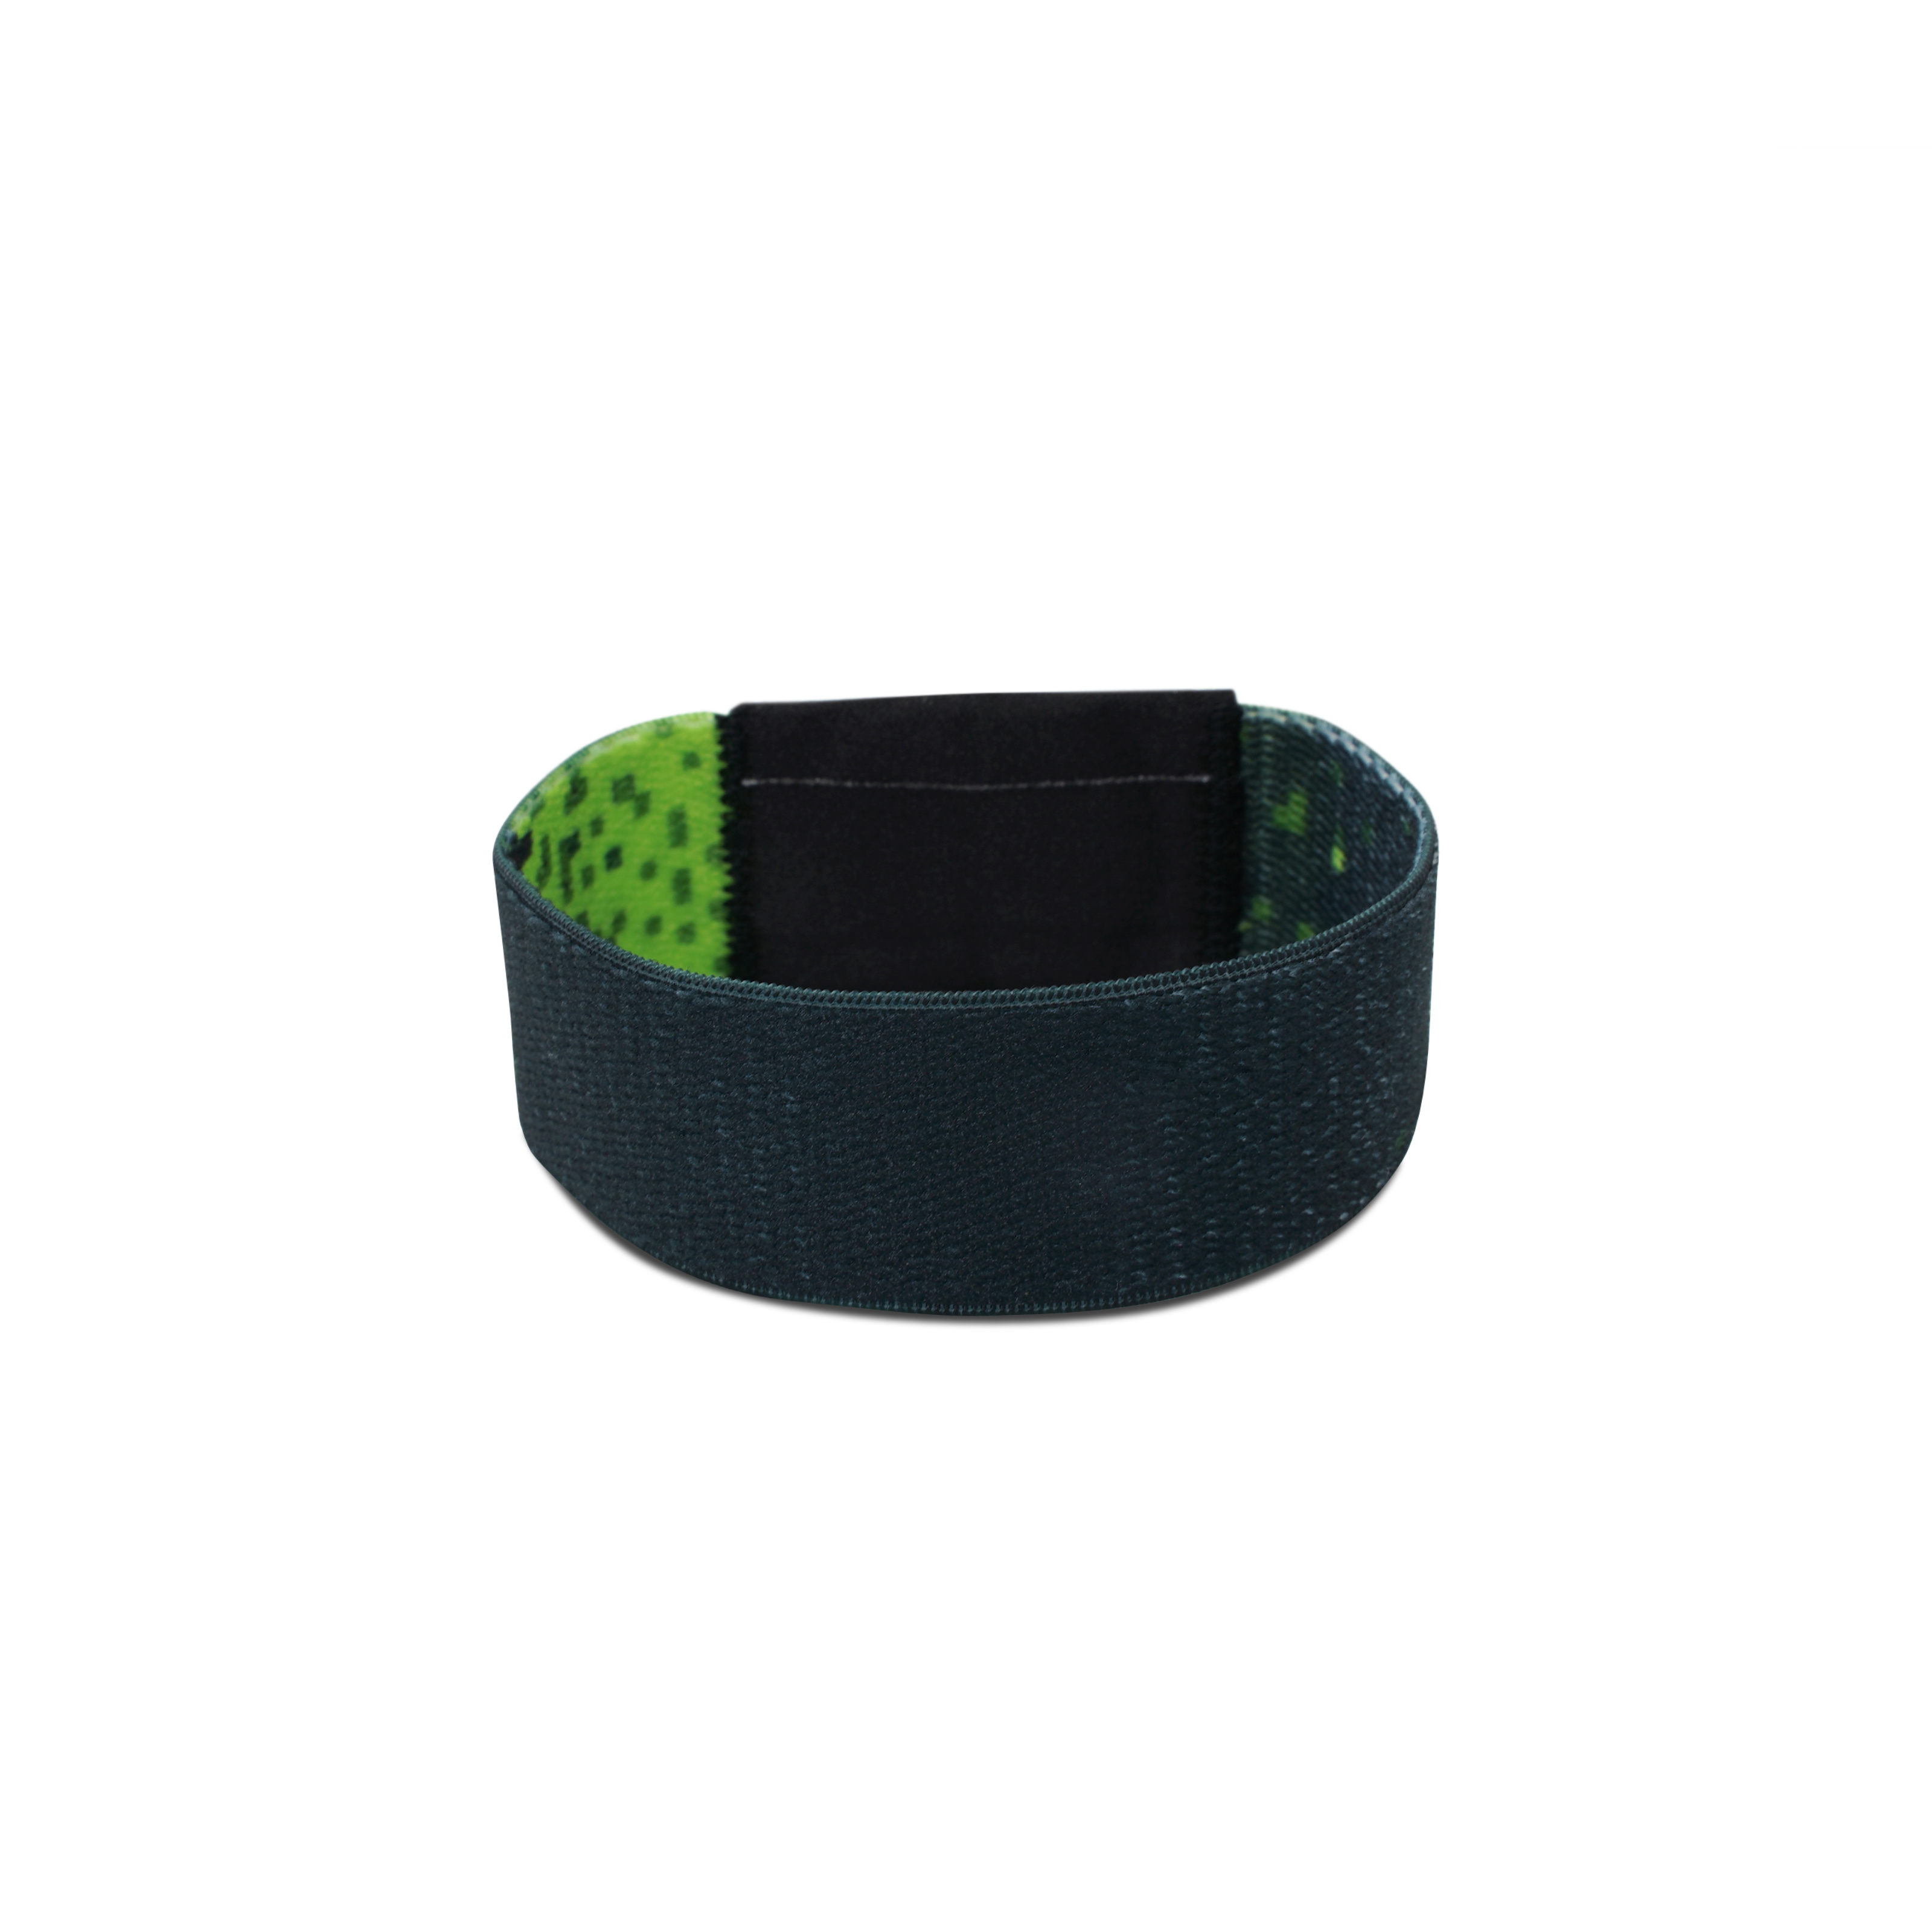 NFC Armband Stoff - 170 x 25 mm - NTAG216 - 924 Byte - dunkelgrün - Größe S - Durchmesser 54 mm